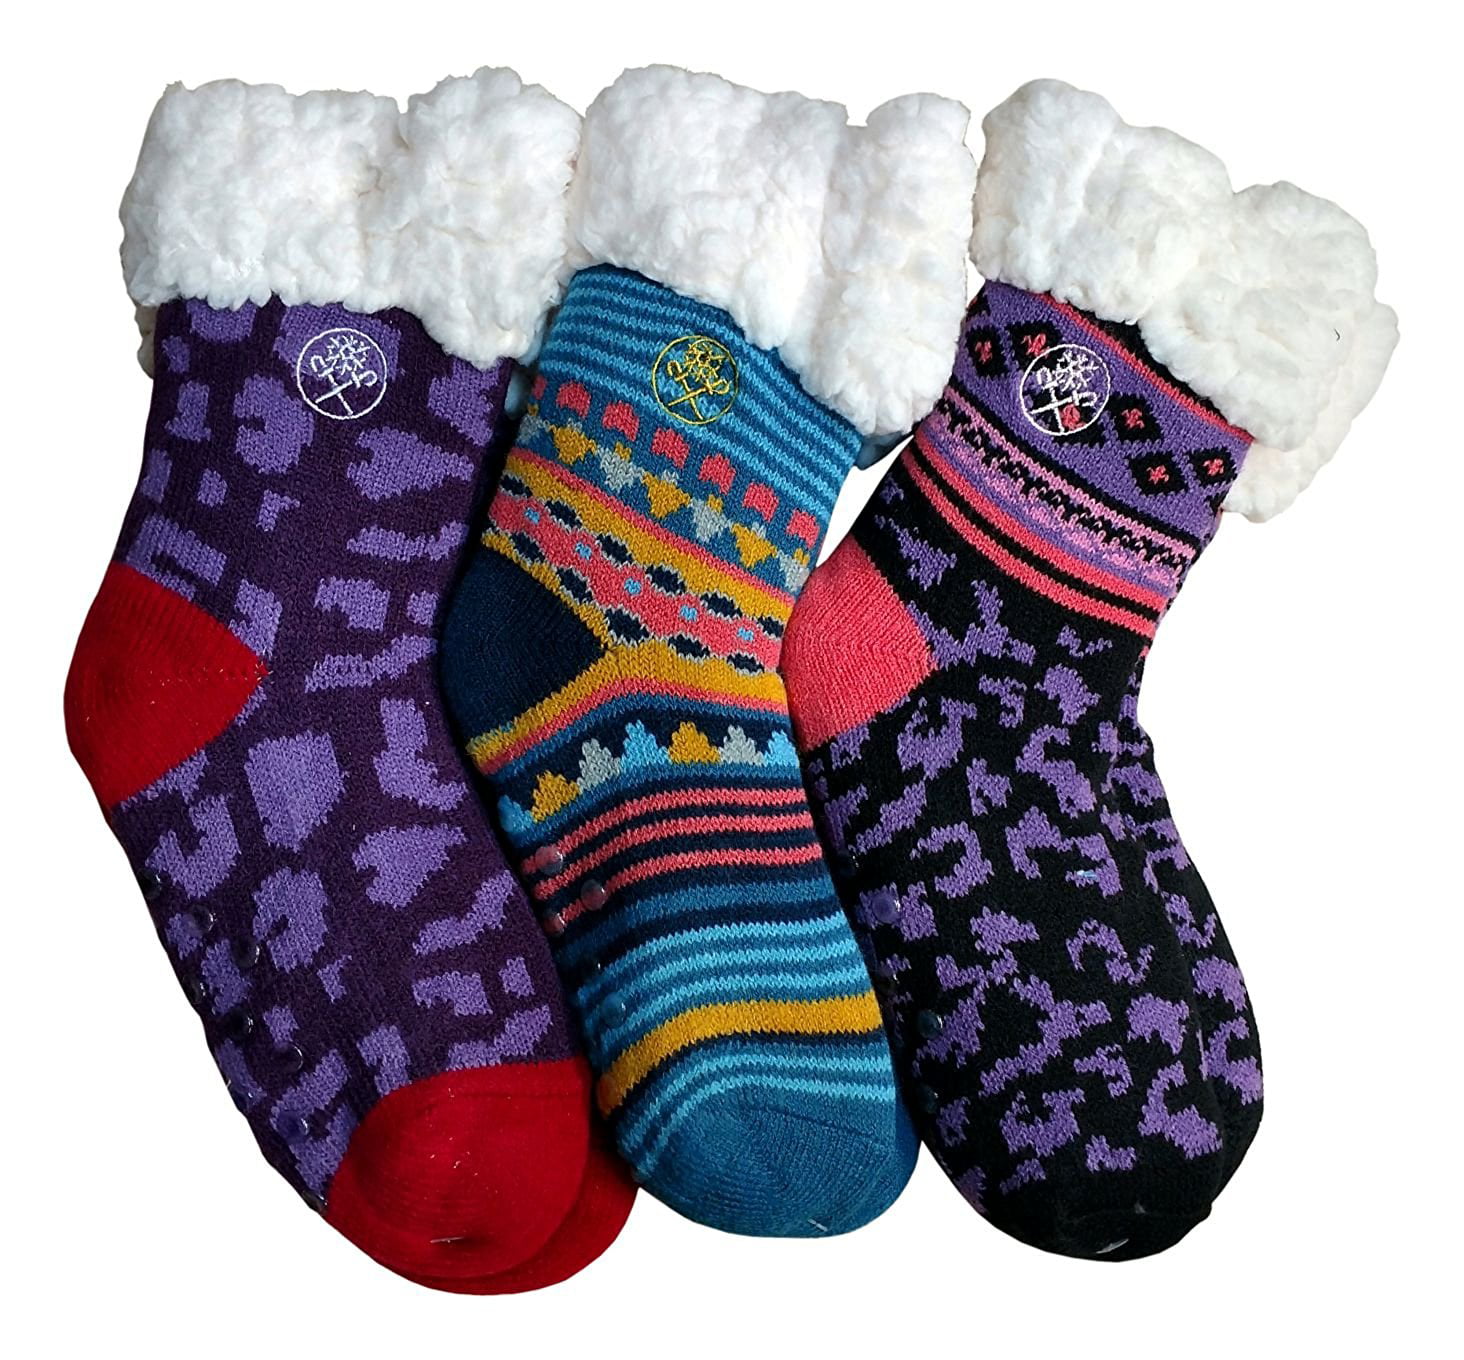 New 6 /12 Pairs Kids Children Girls Winter Ankle Socks Super soft UK Size 6-8.5 